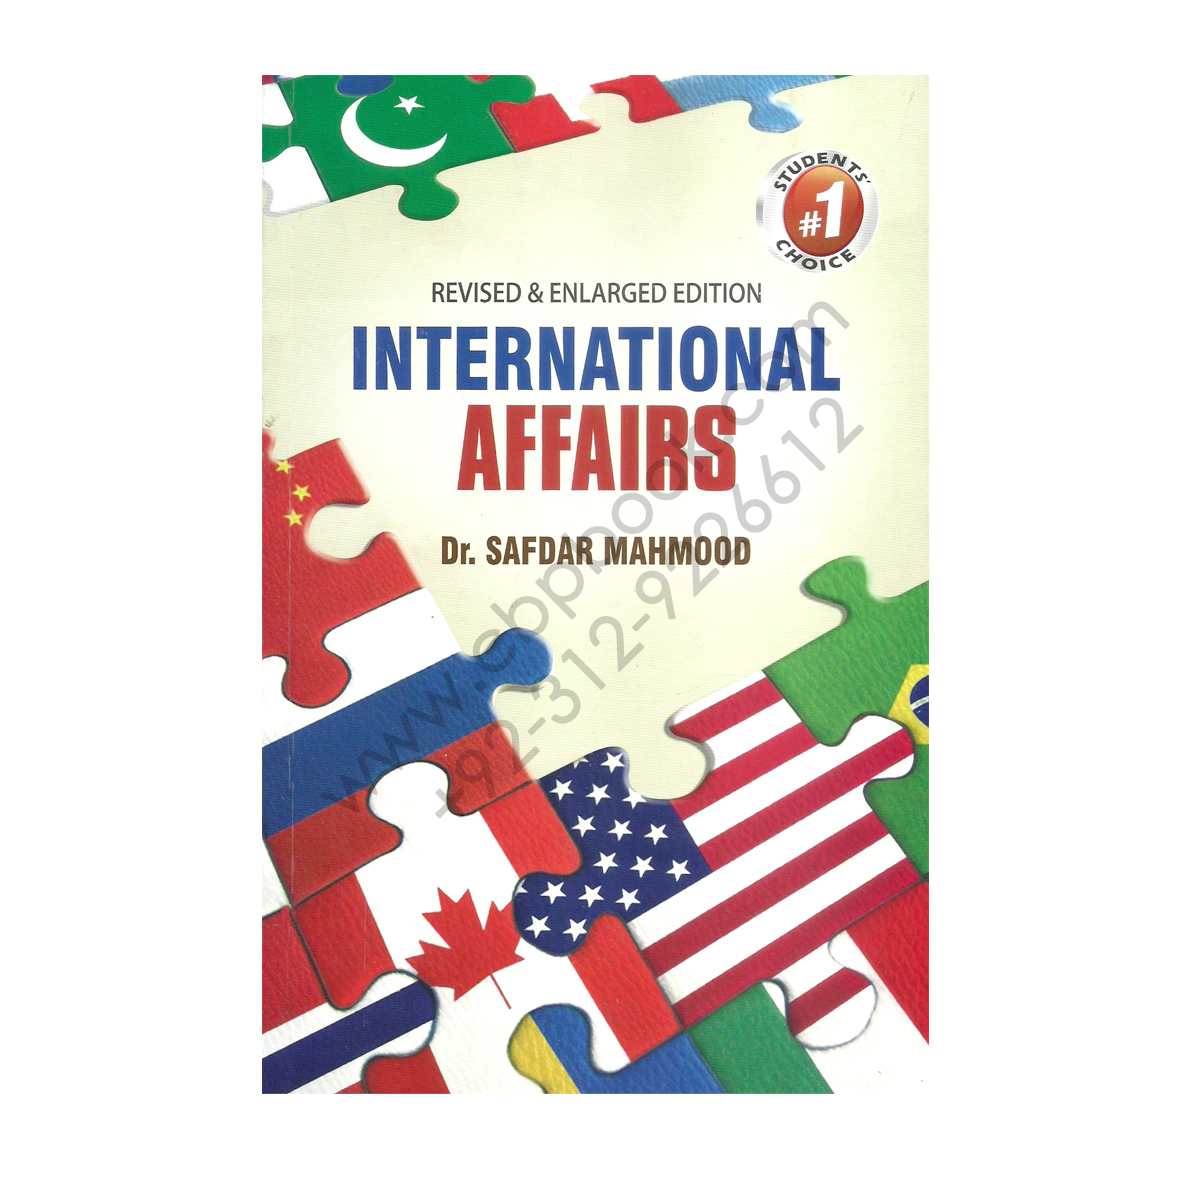 International Affairs
